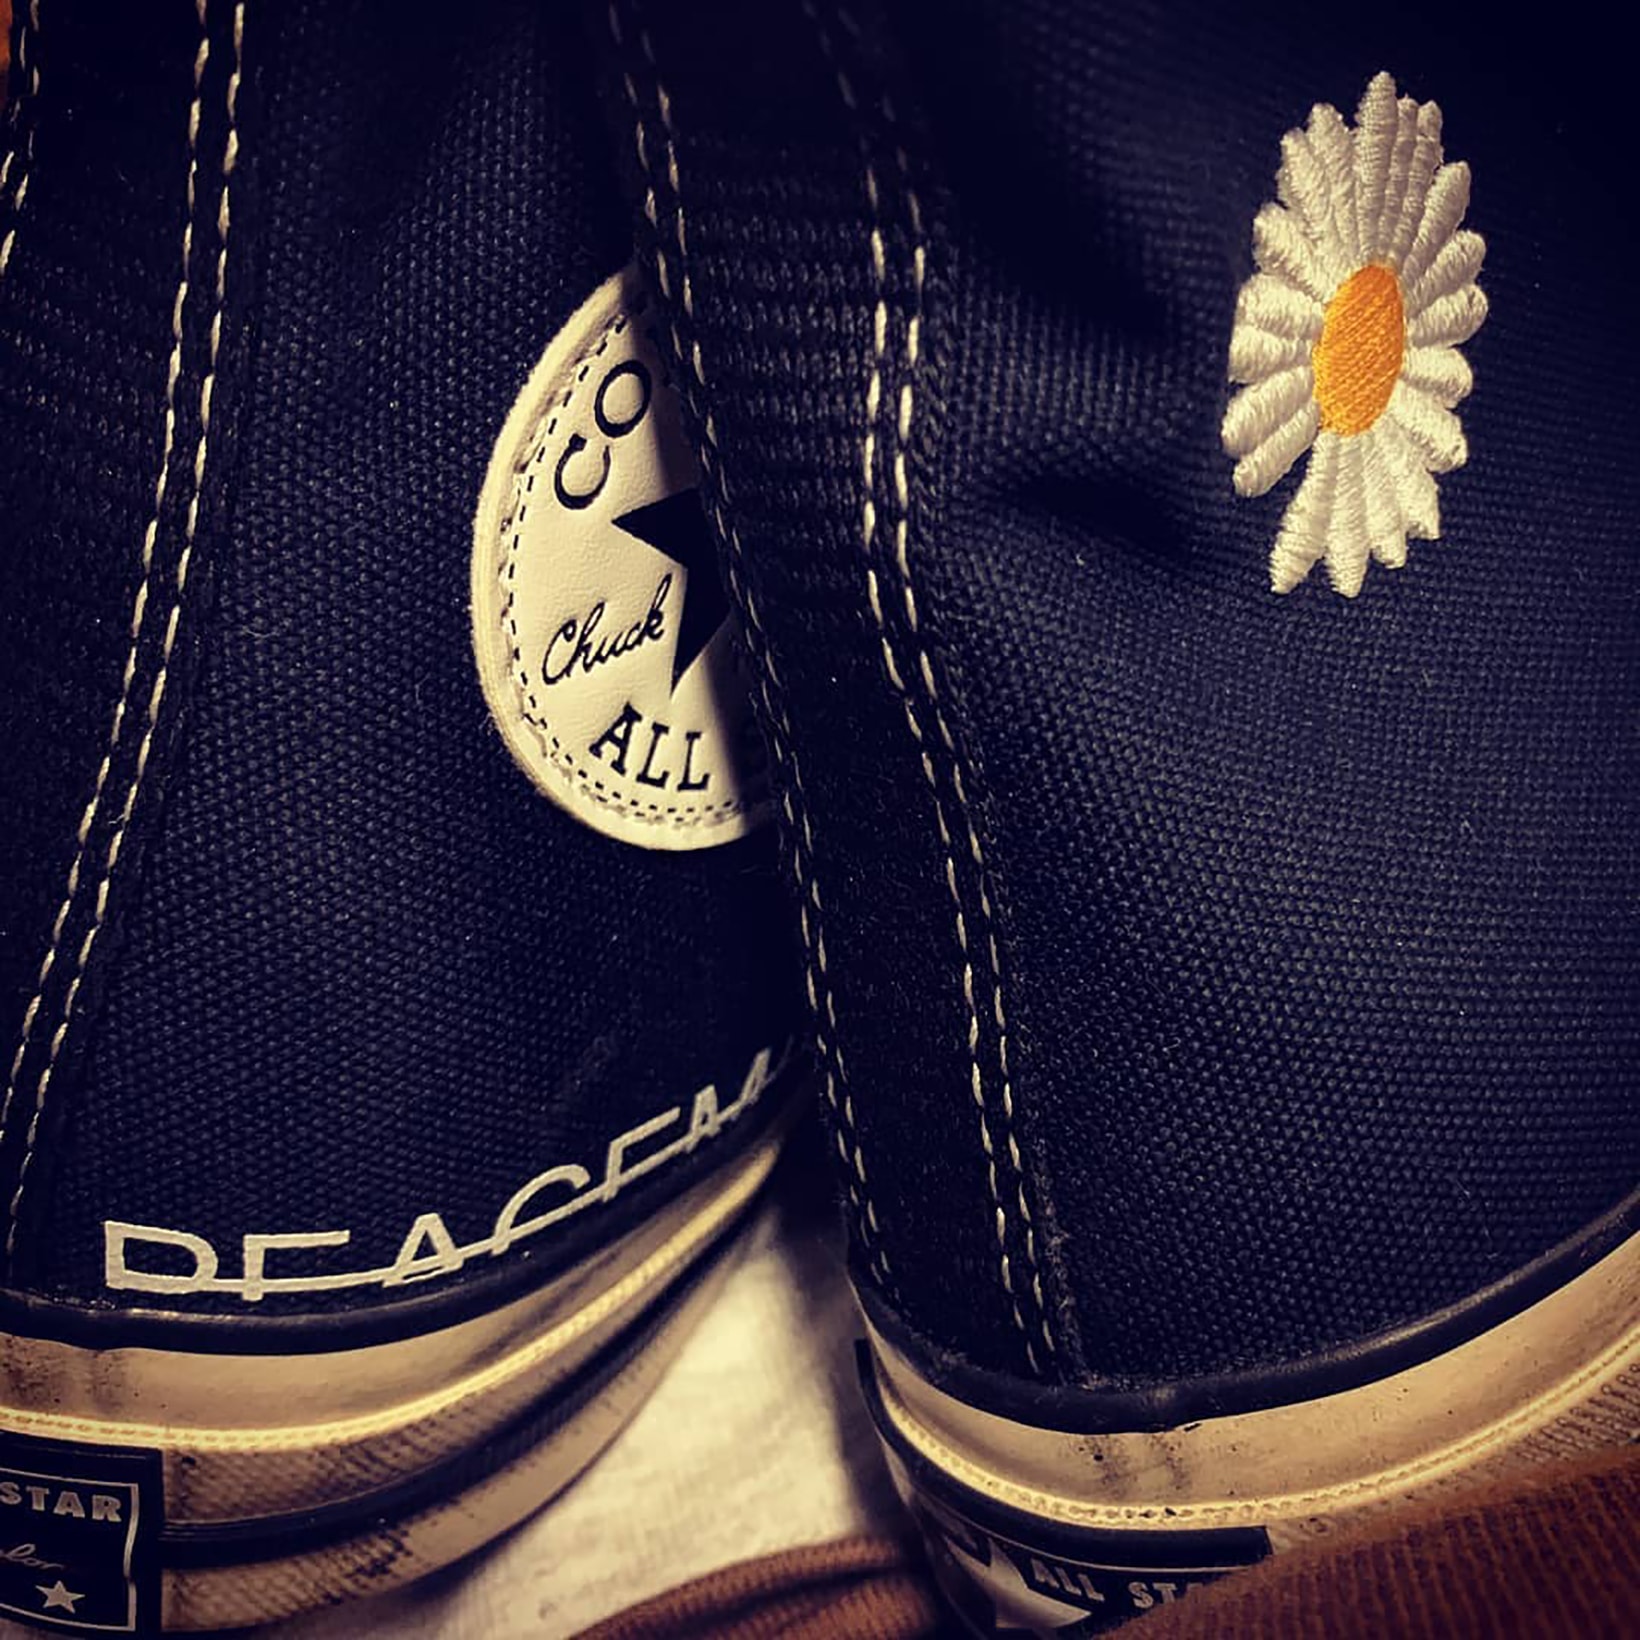 peaceminusone g dragon converse chuck 70 collaboration sneakers daisy navy blue footwear shoes sneakerhead